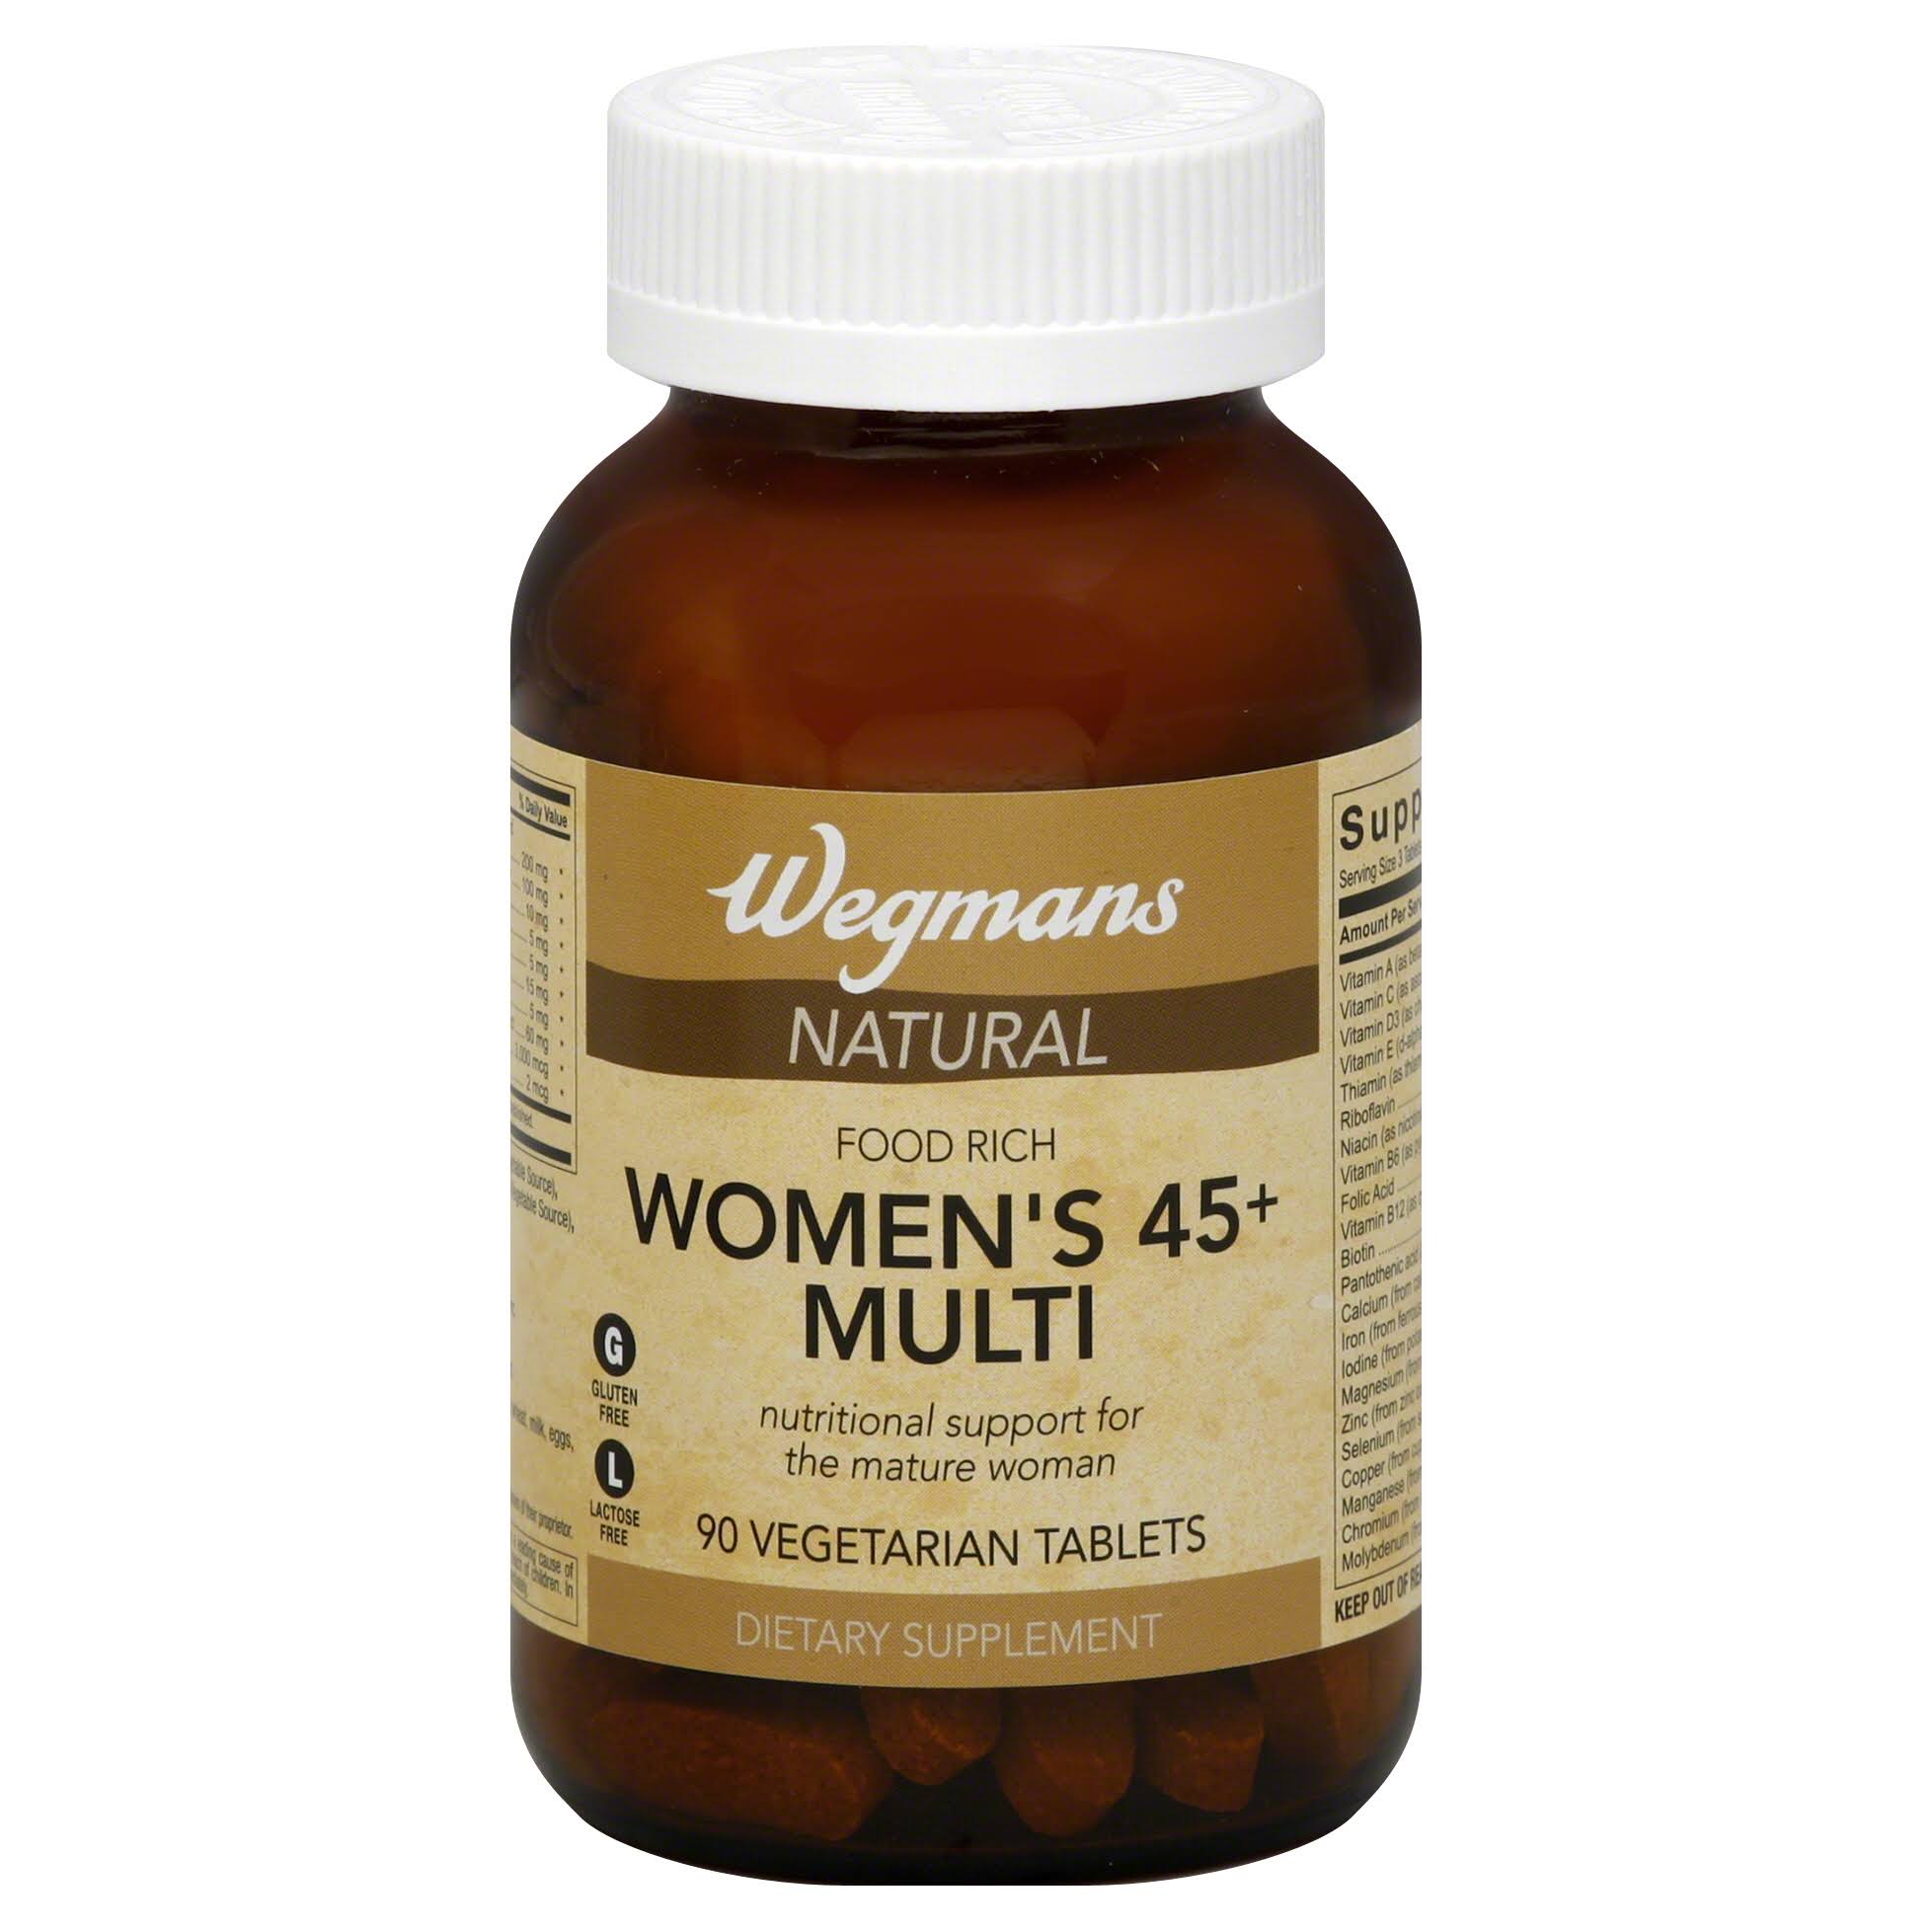 Wegmans Women's 45+ Multi, Food Rich, Natural, Tablets - 90 tablets